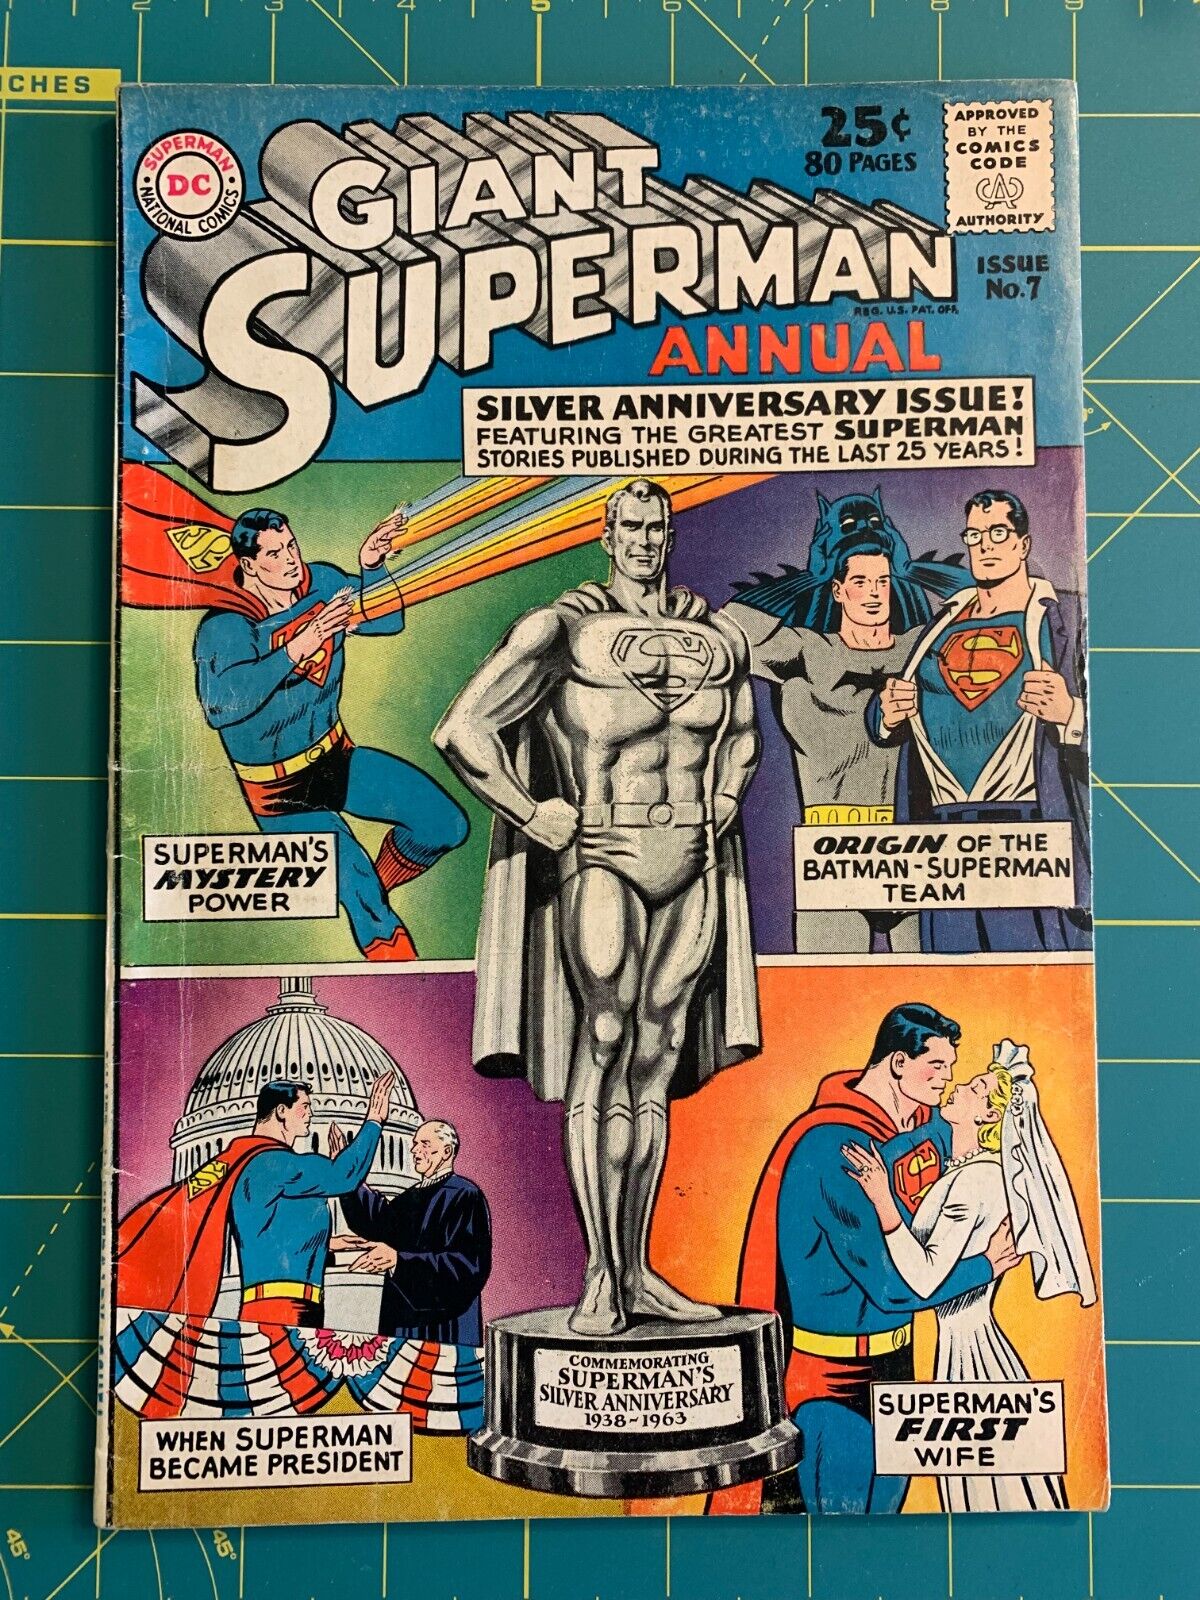 Giant Superman Annual #7 - 1963 - Vol.1          (7897)